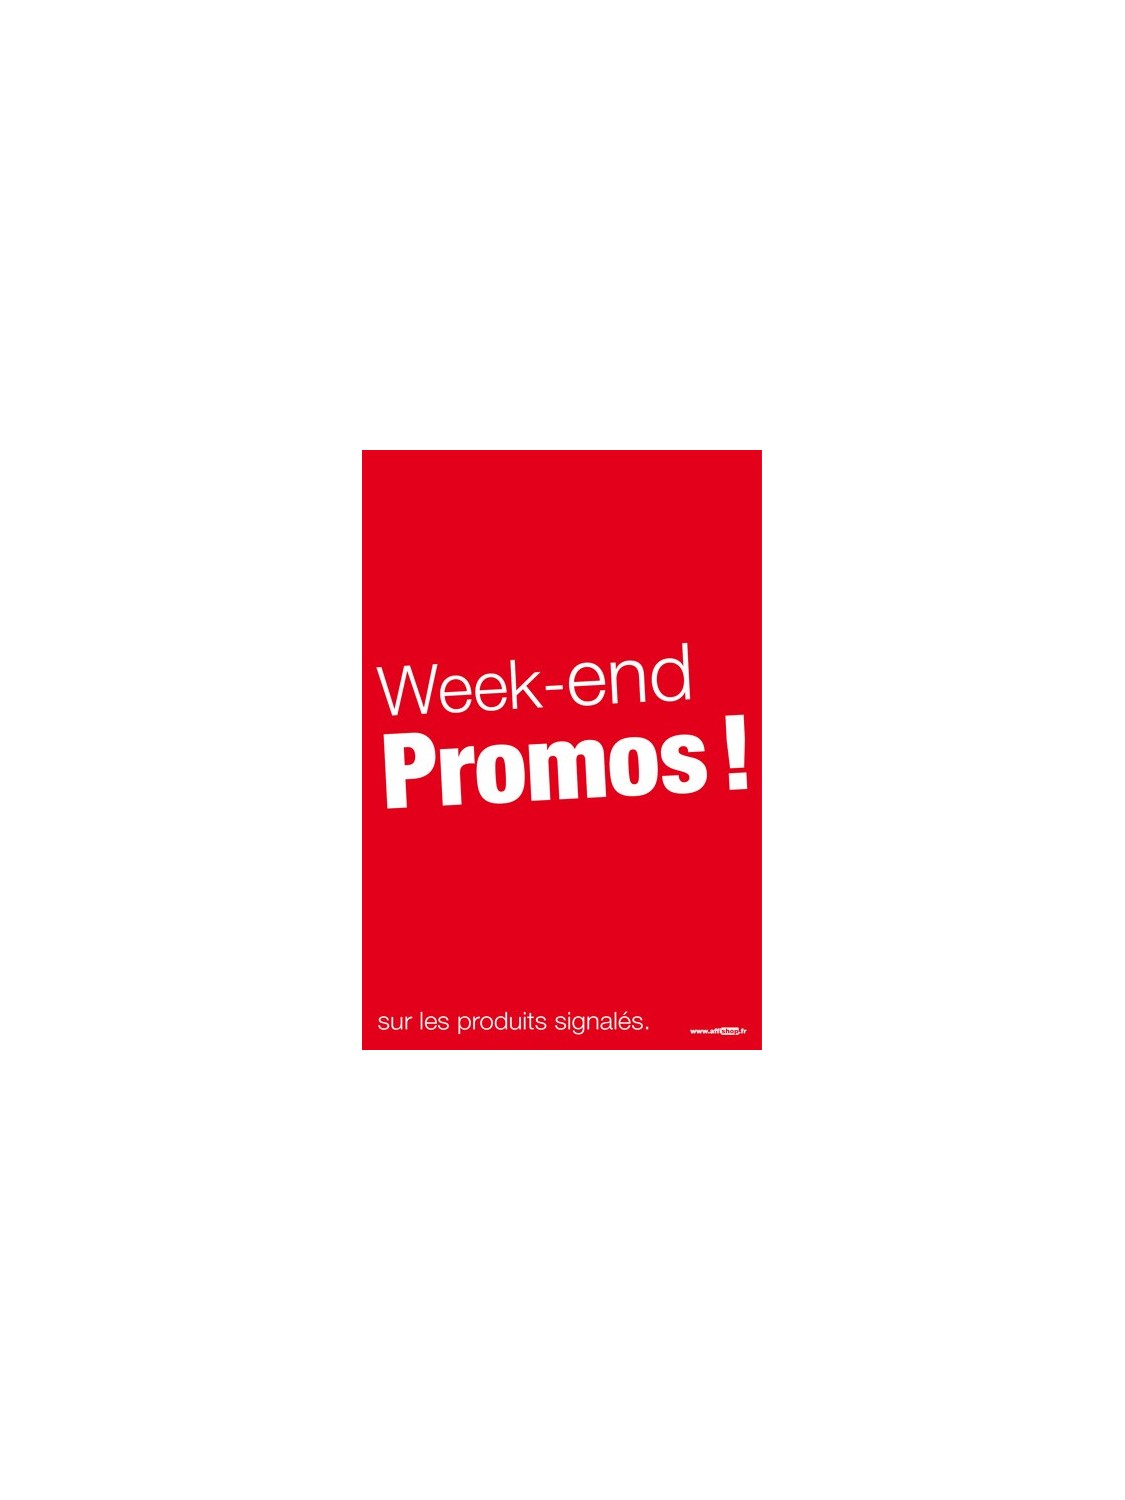 Affiche "week-end promos"